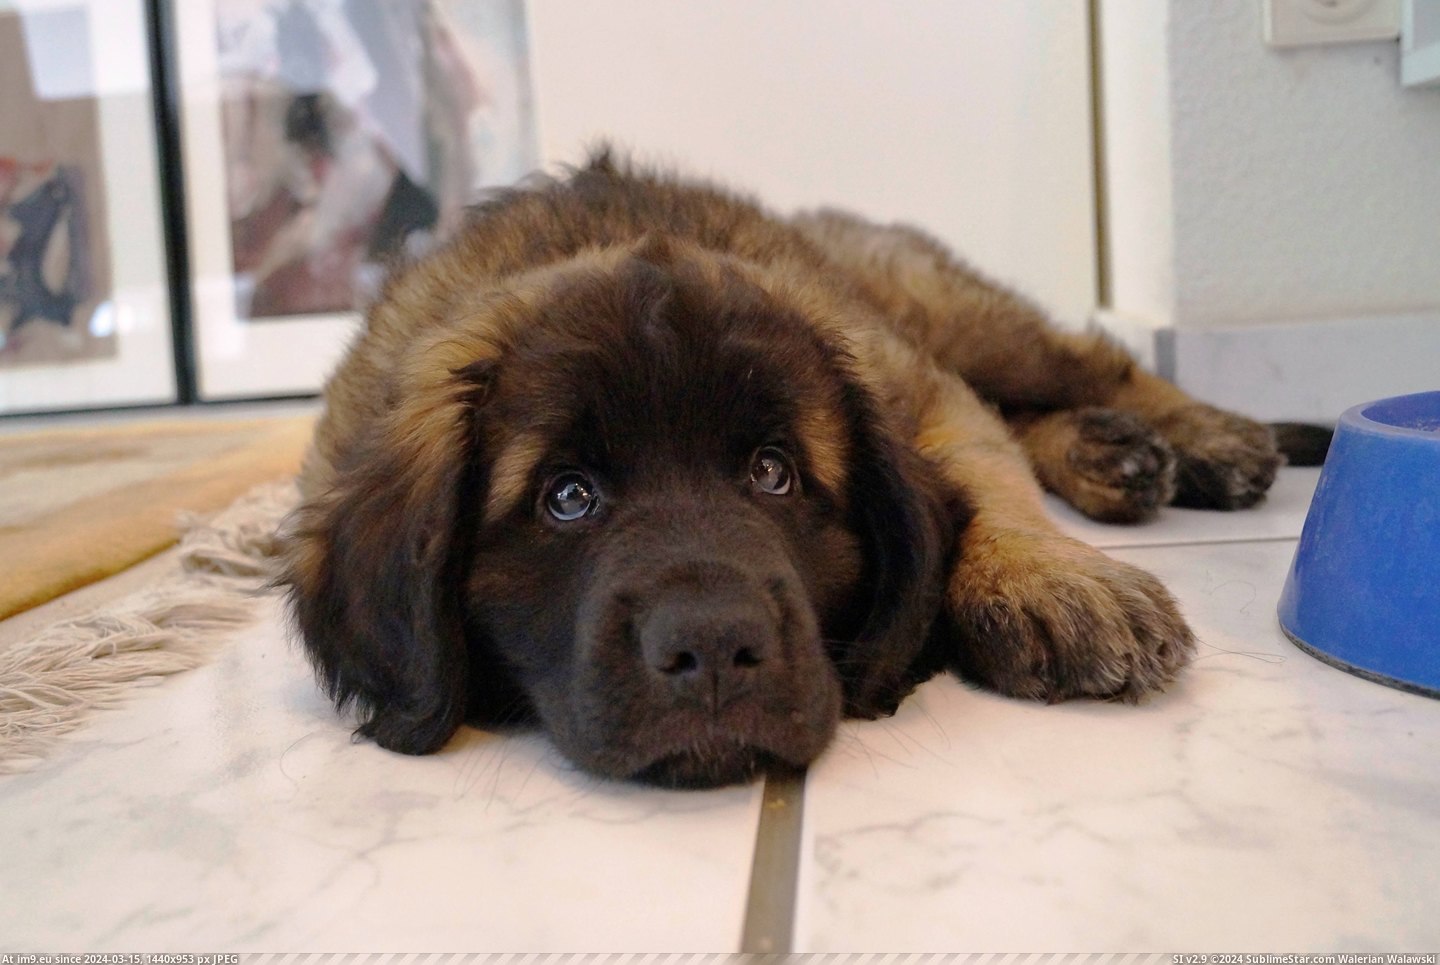 #Puppy #Weeks #Pounds #Cub #Leonberger #Father #Bear [Aww] Father just got a Leonberger puppy. 9 weeks, 19 pounds already. Like a little bear cub. Pic. (Изображение из альбом My r/AWW favs))